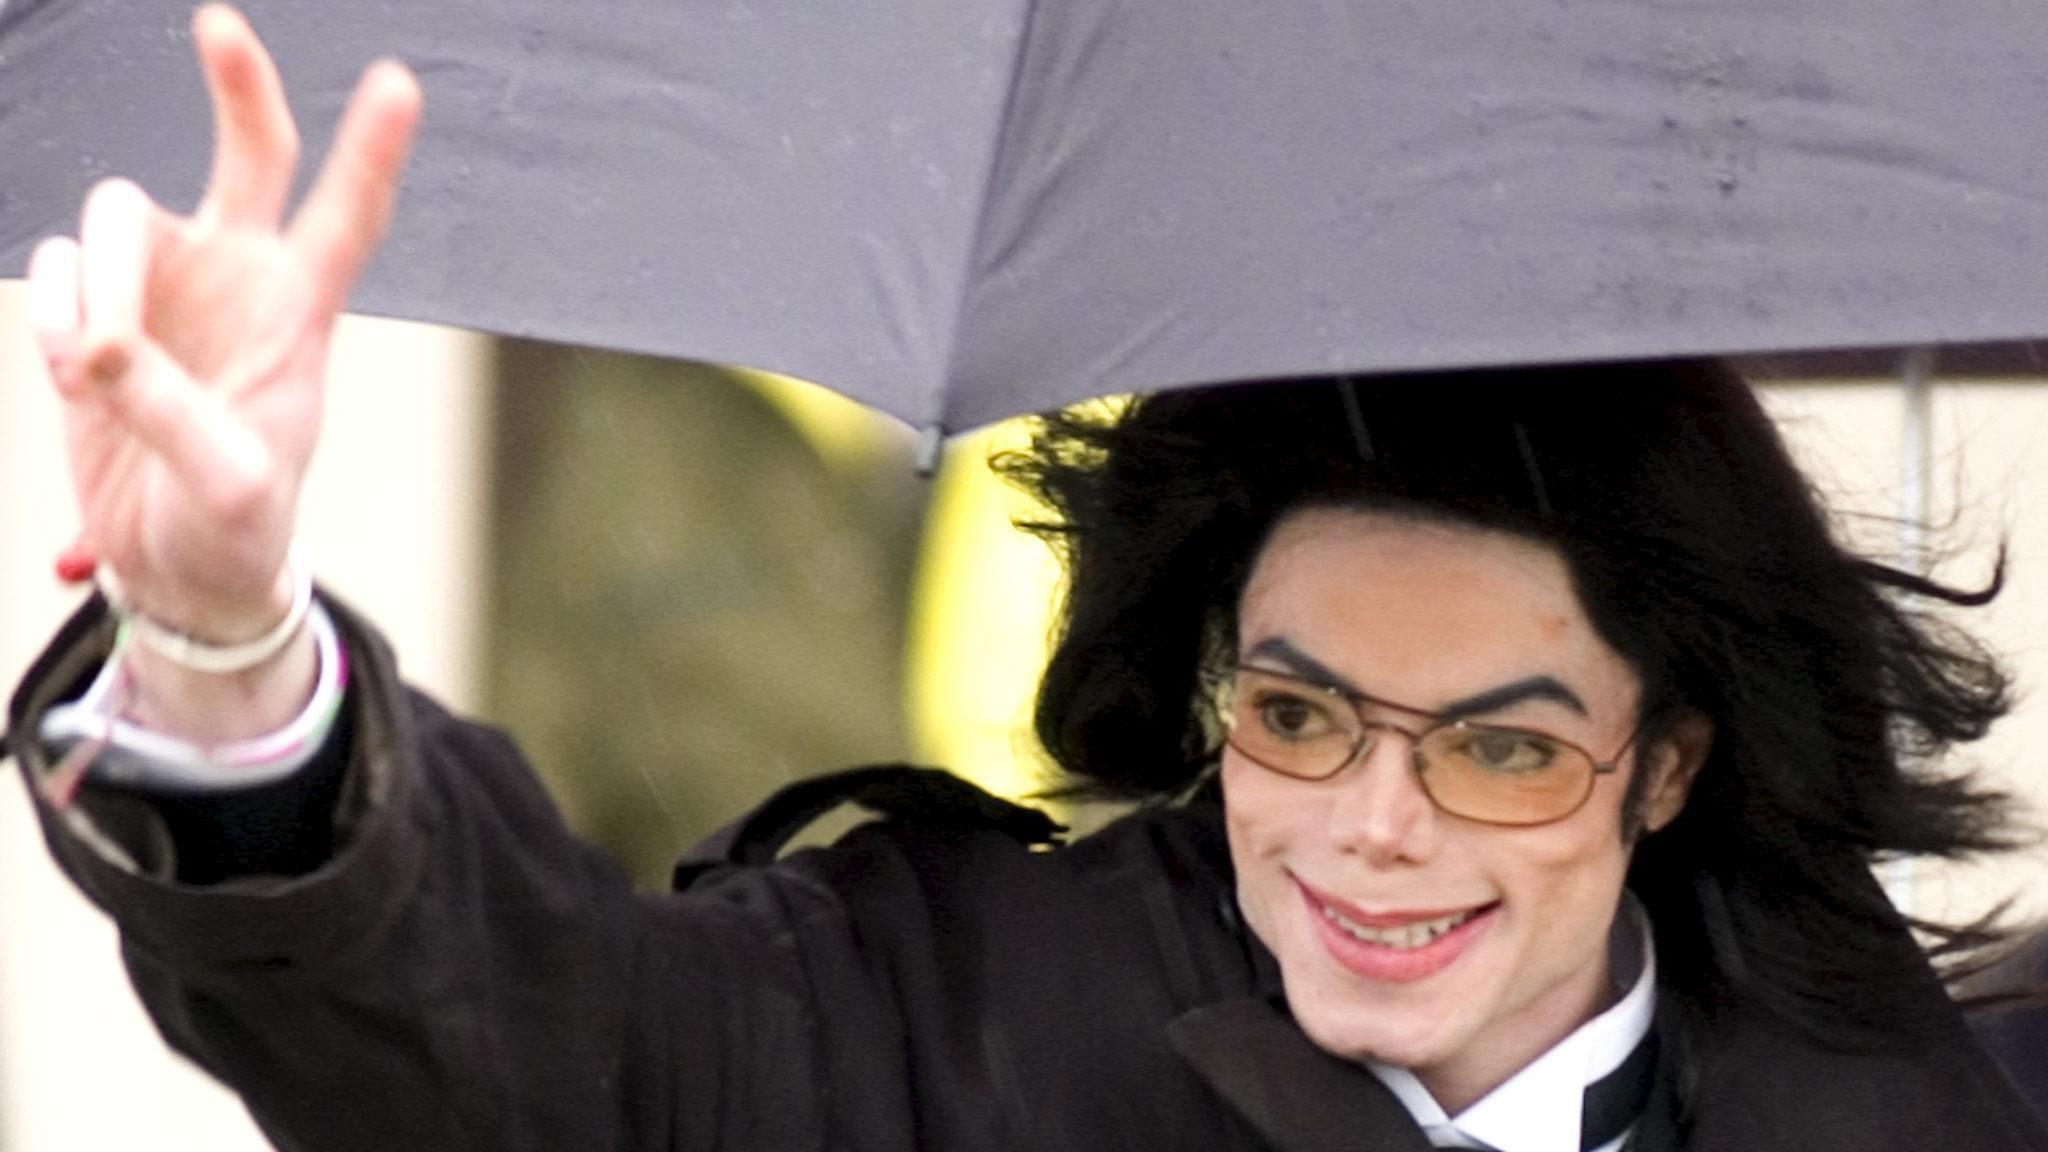 Jackson lebt noch michael Michael Jackson